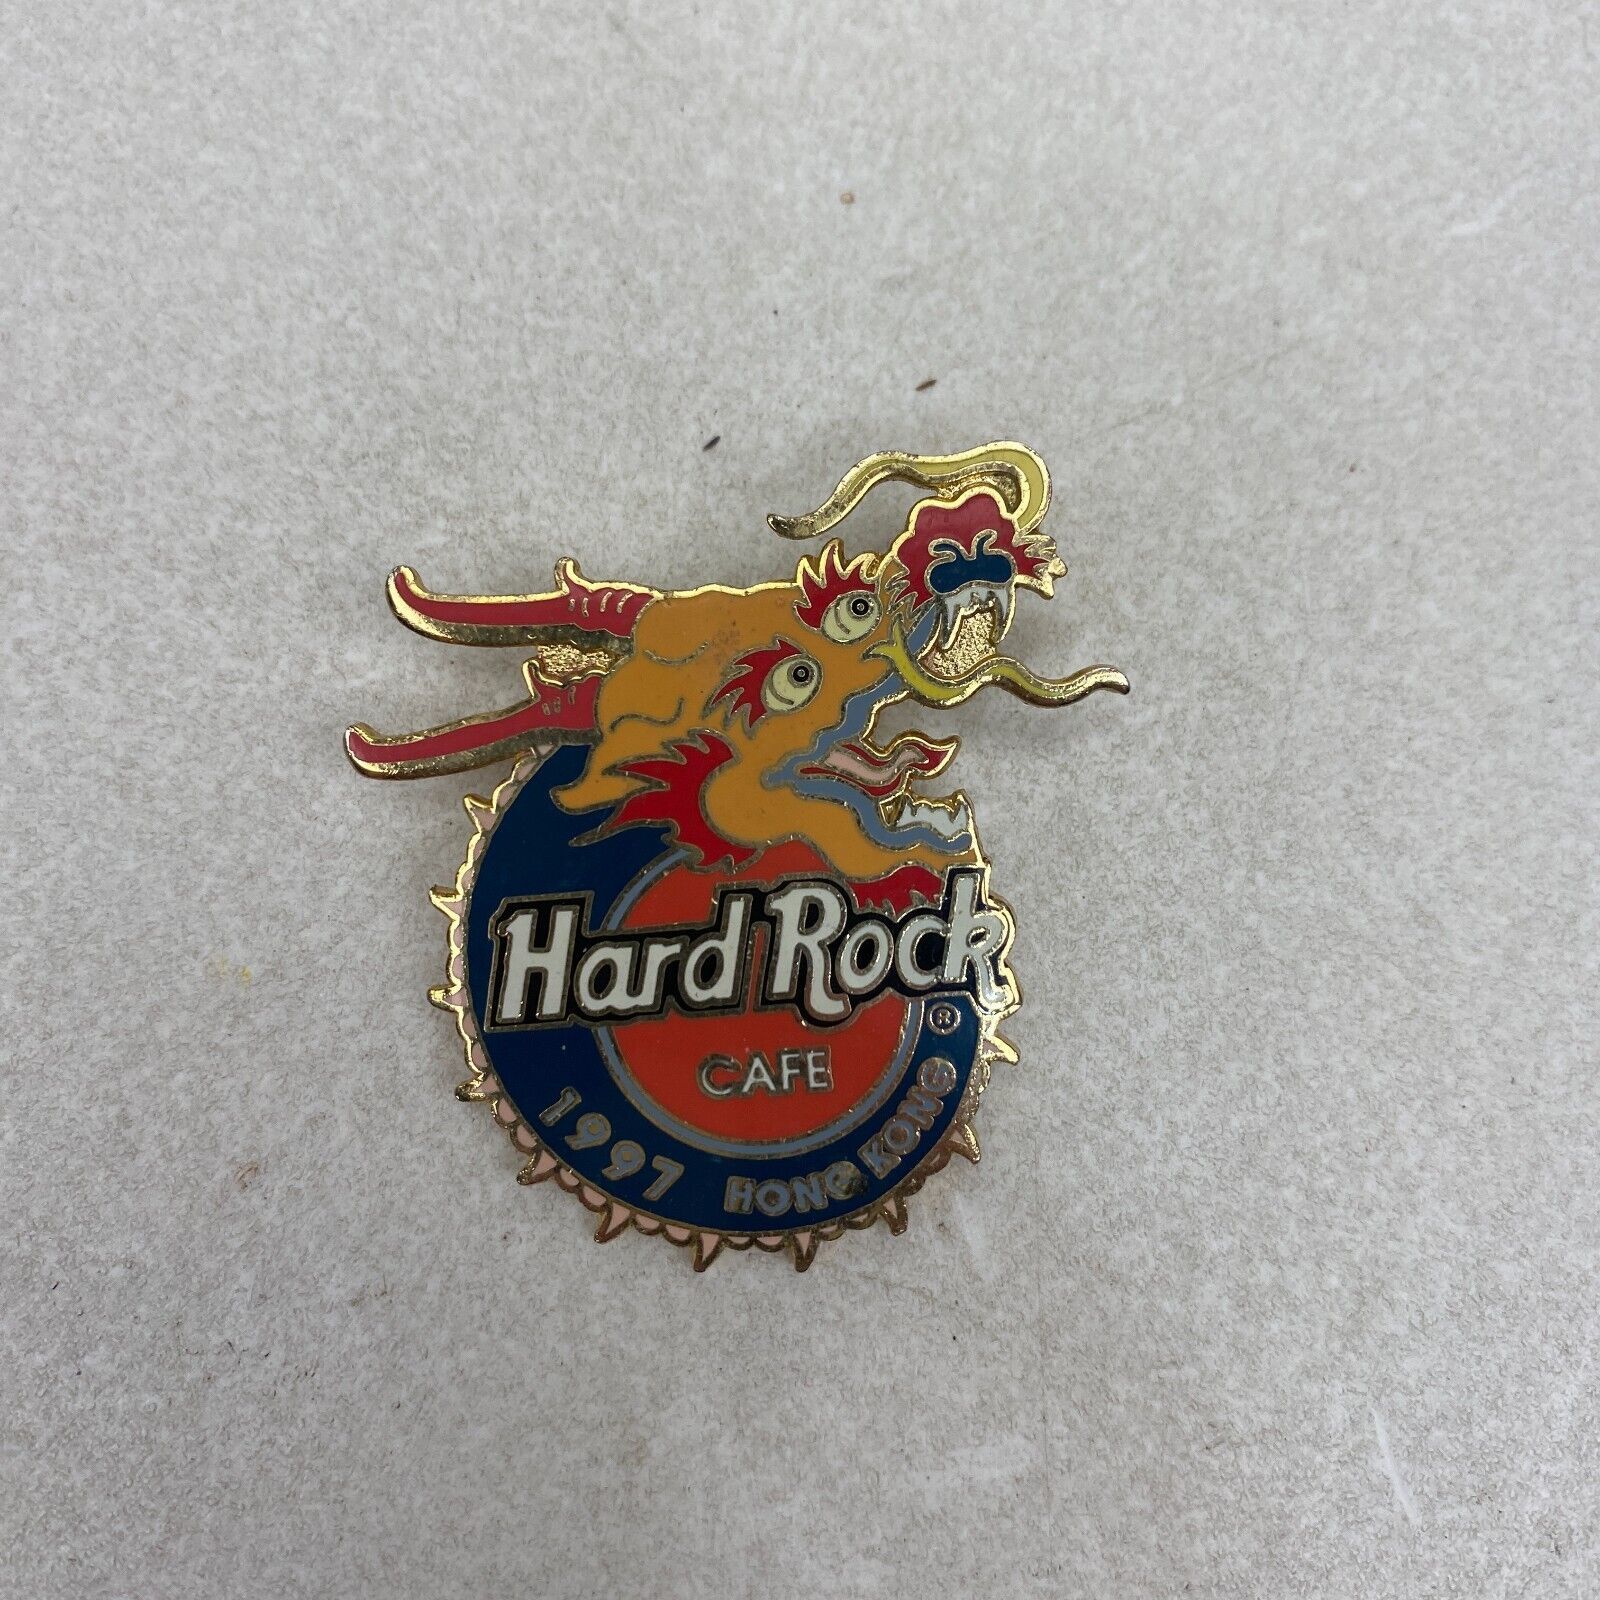 Hard Rock CAFE HONG KONG 1997 Vintage Jewelry Broach Enamel Lapel Pin Pinback - $6.76